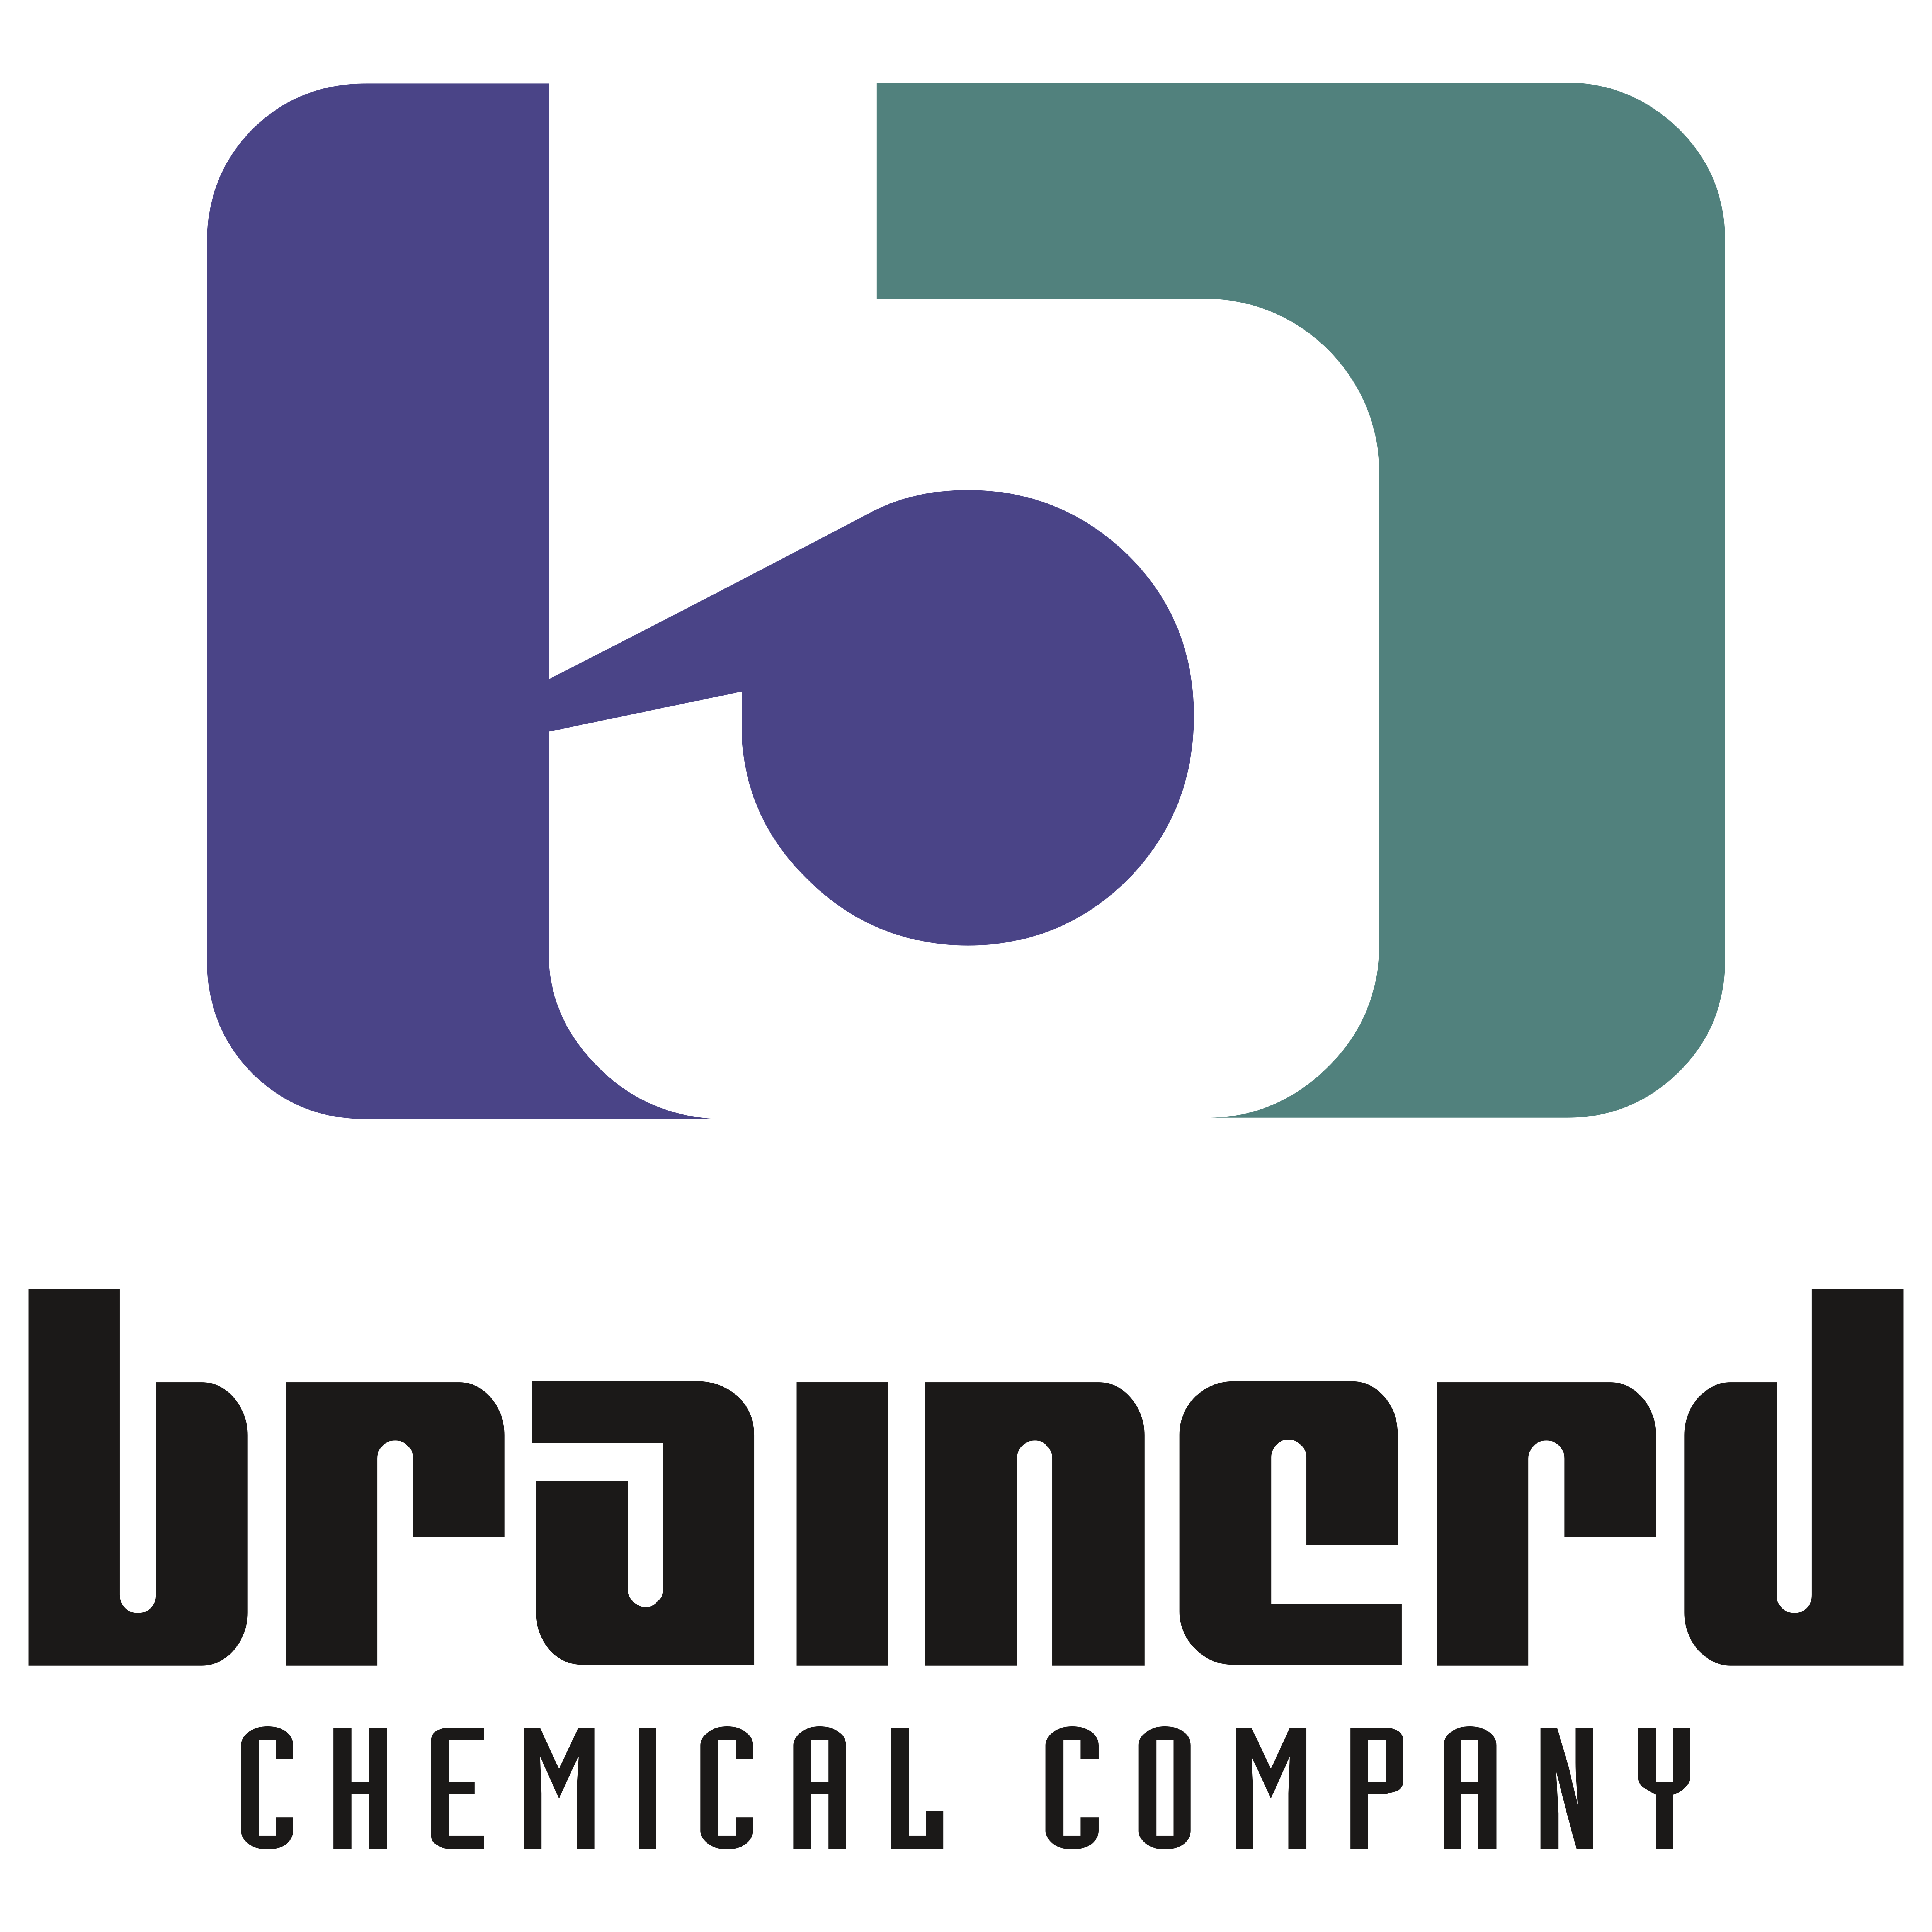 Chemicals лого. Chemical Company logo. Нео Кемикал лого. Stream Chemicals логотип. Chemical companies